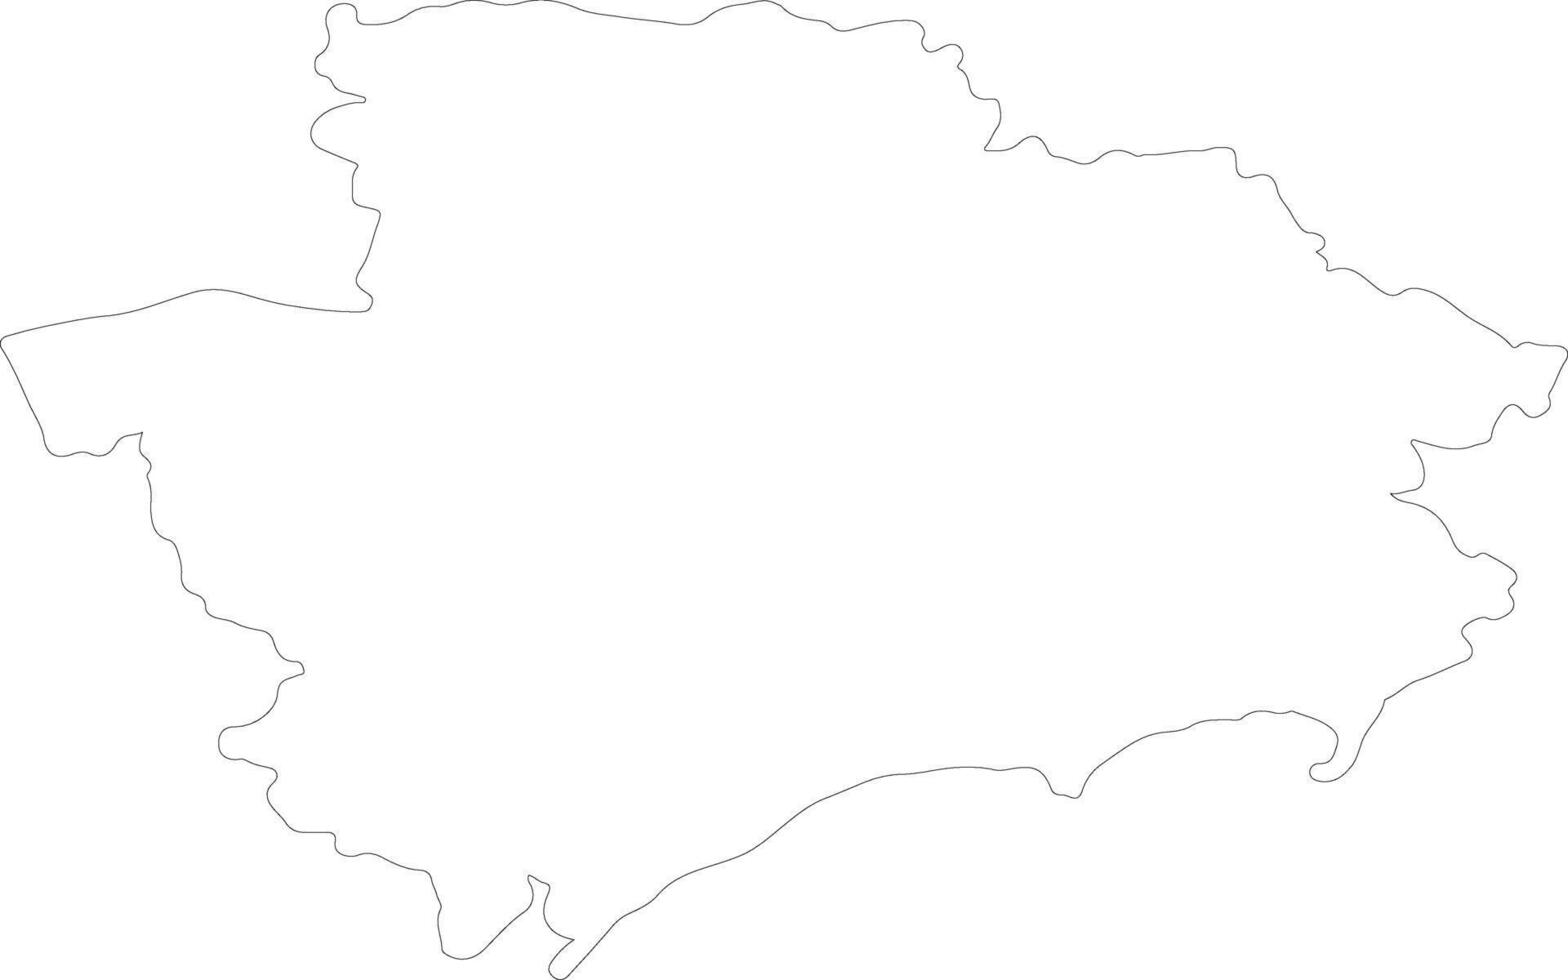 zaporizhzhya Ucraina schema carta geografica vettore